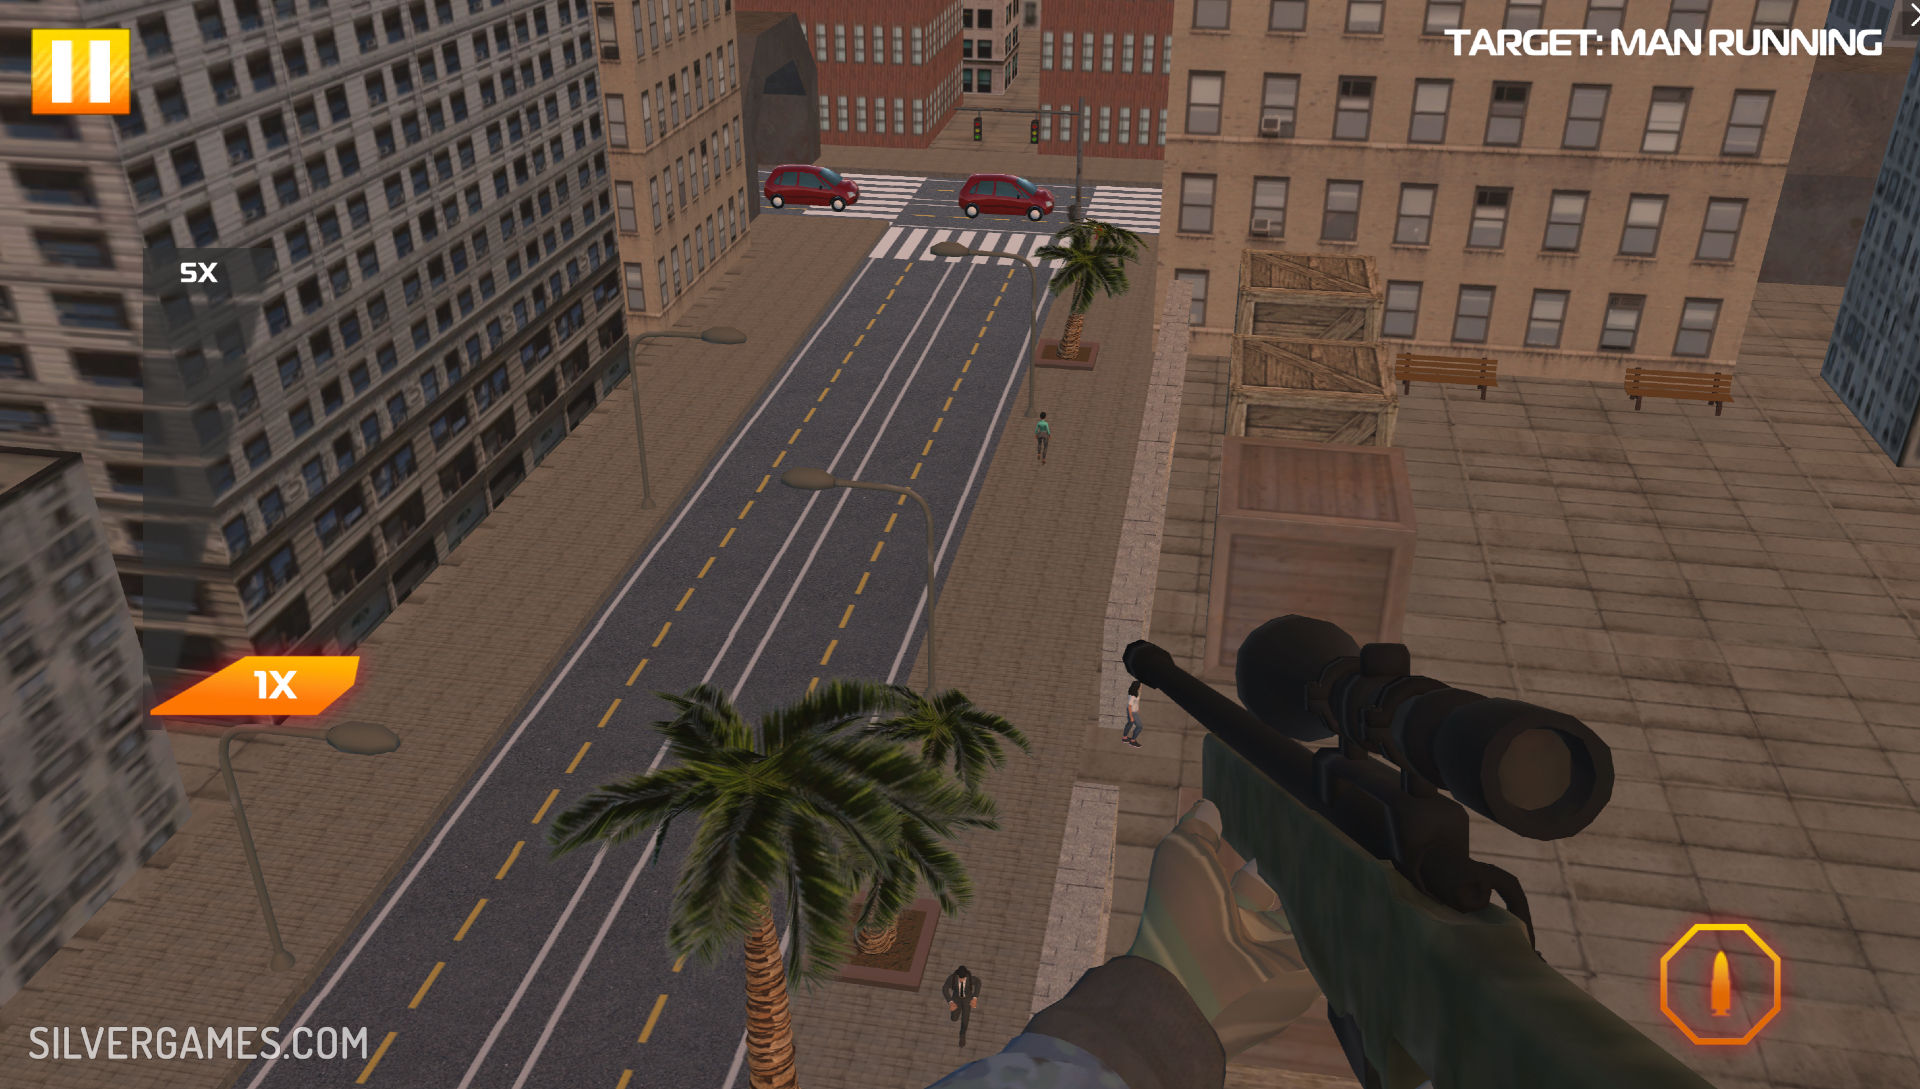 sniper 3d online